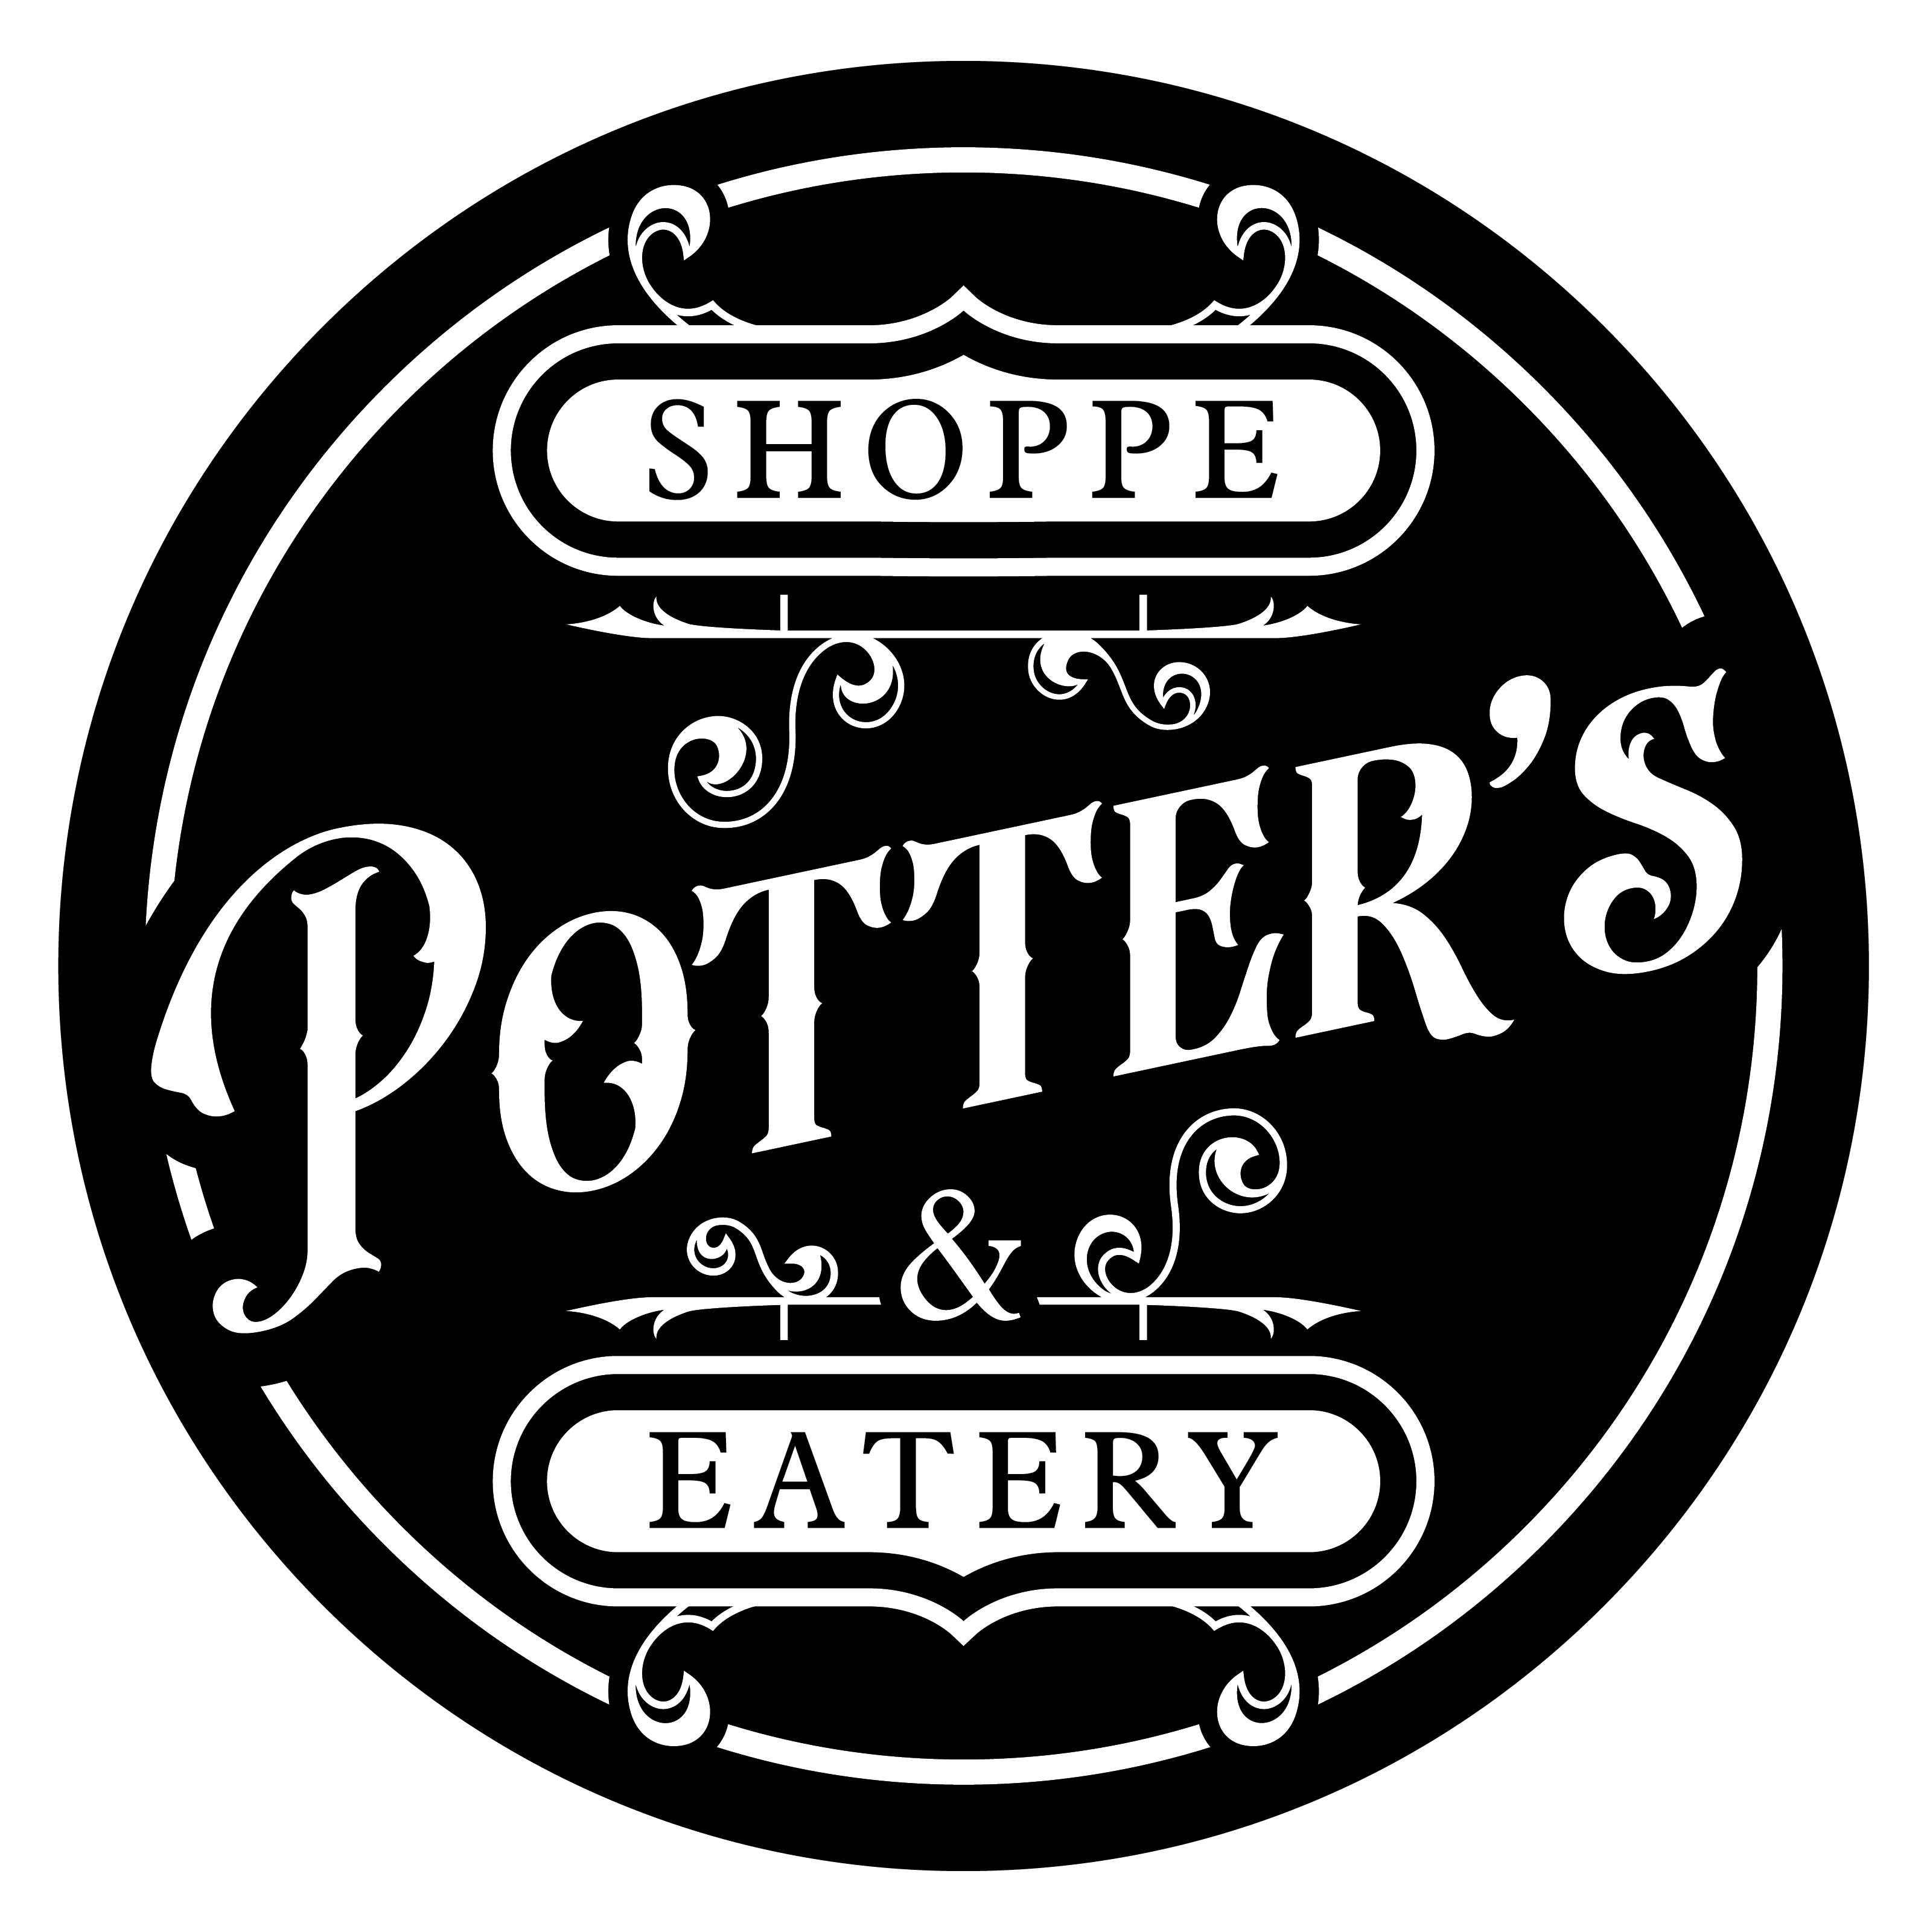 Potter's Shoppe & Eatery